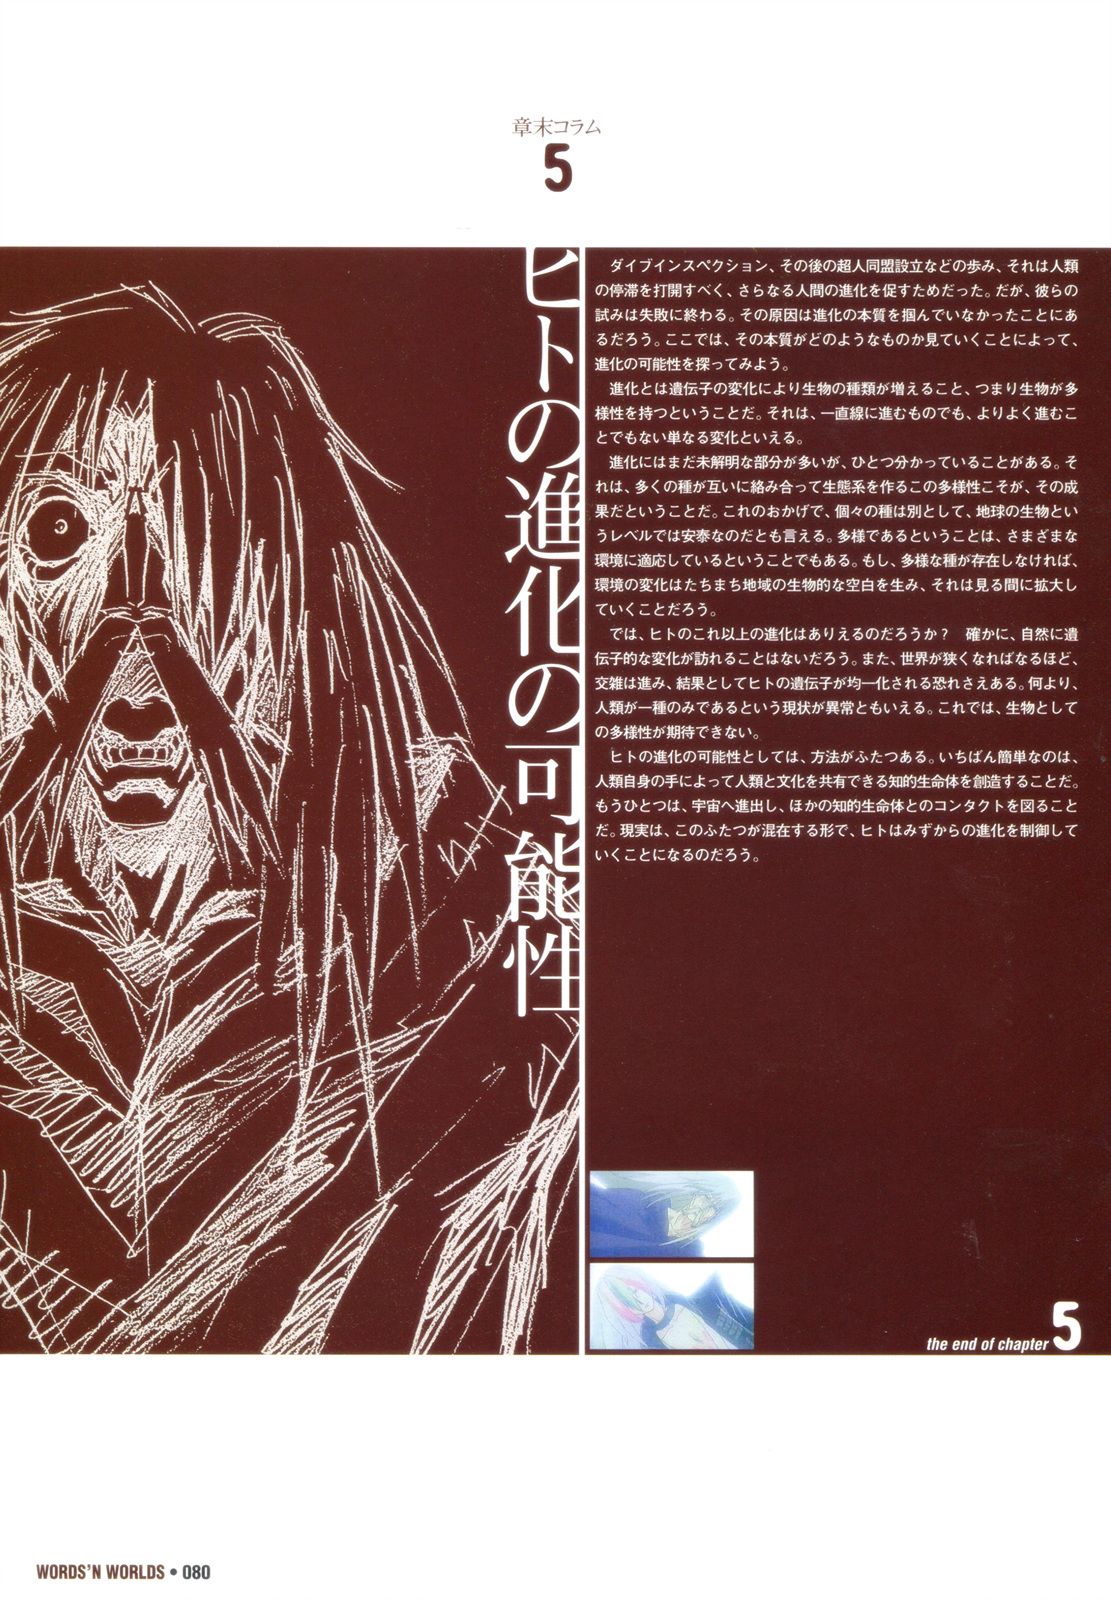 BETTERMAN COMPLETE BOOK 鑑-kagami- - 第02卷(2/3) - 2